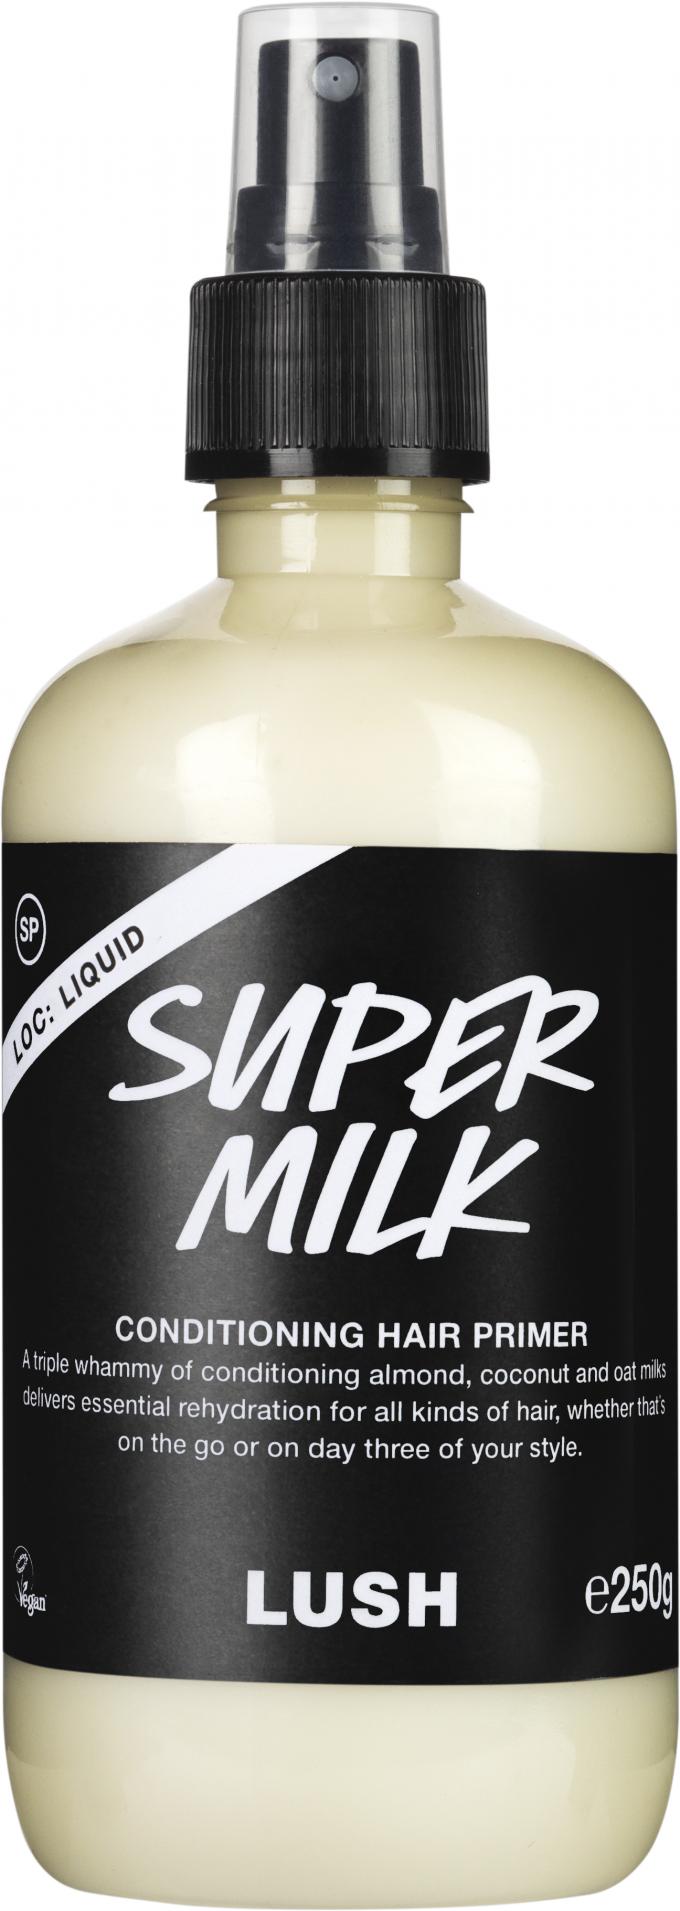 Super Milk - Conditioning Spray